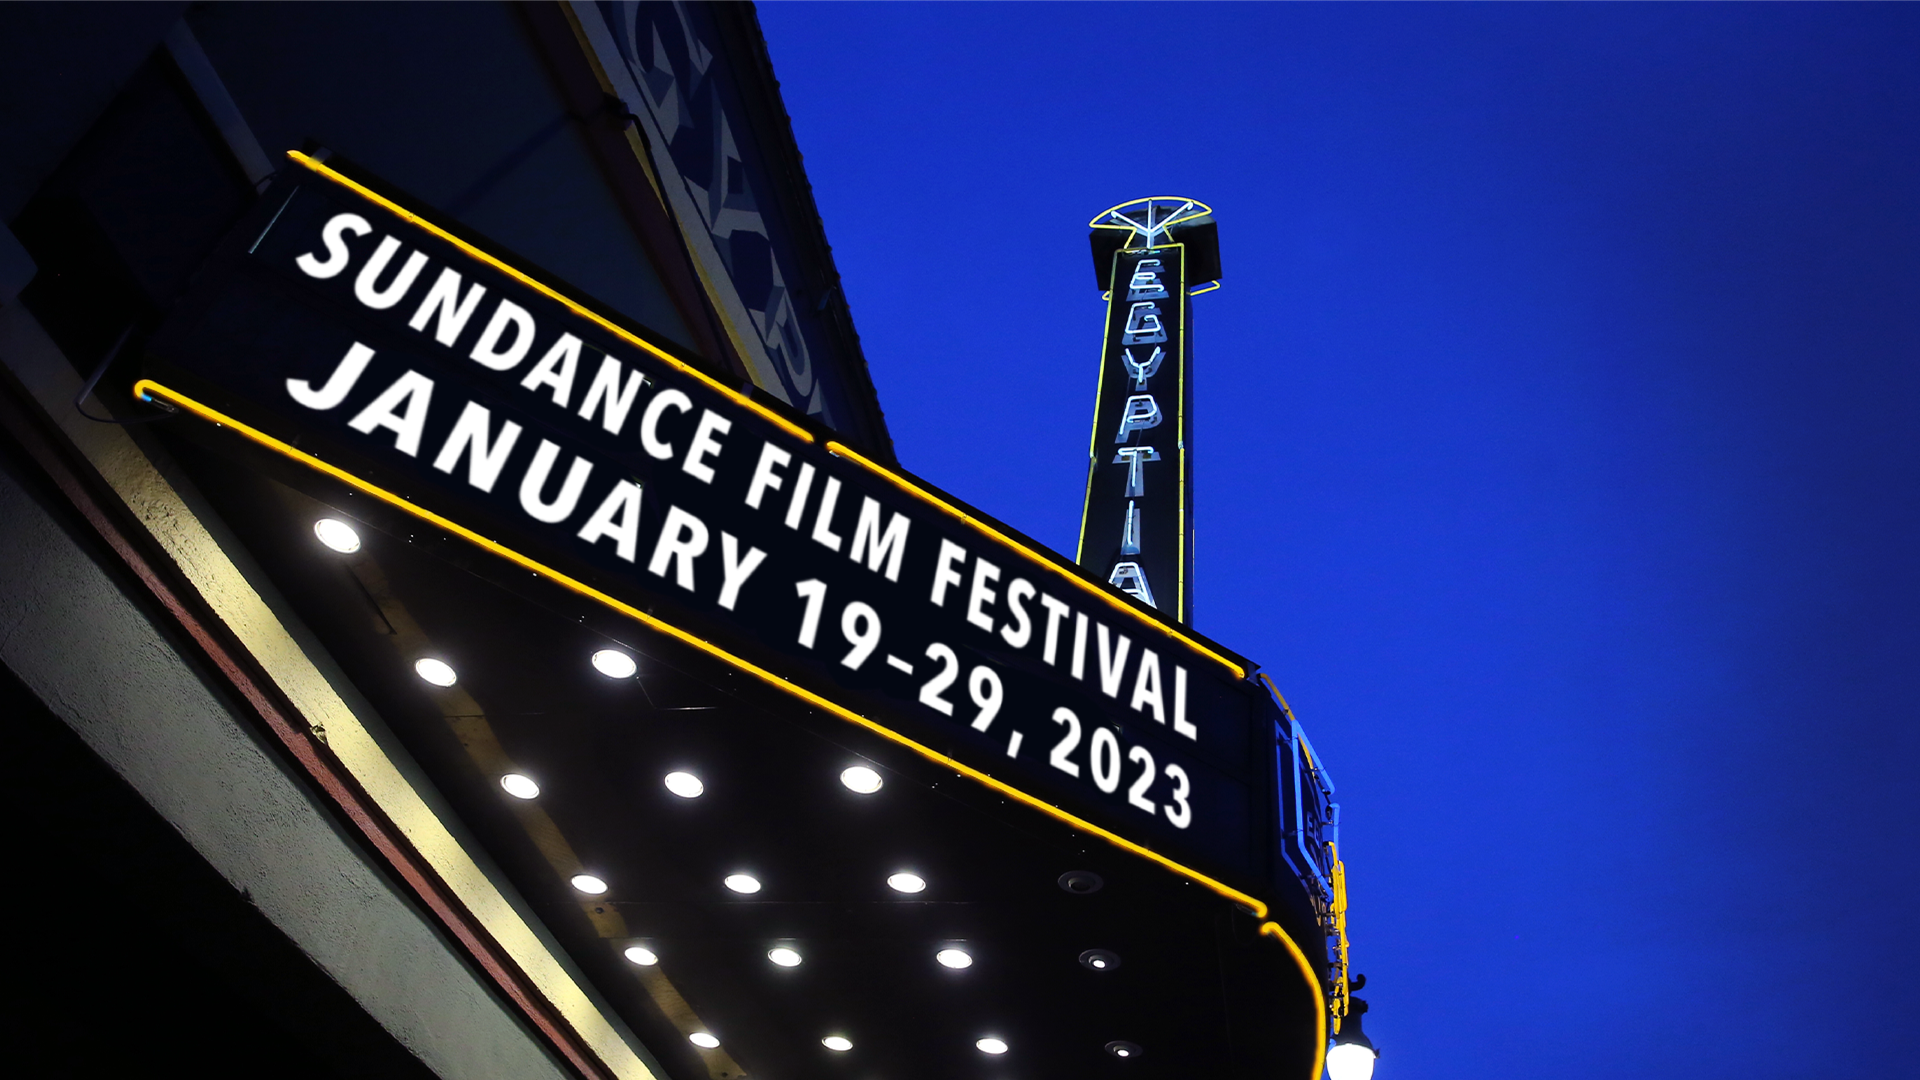 Sundance Film Festival marquee sign in Park City, Utah